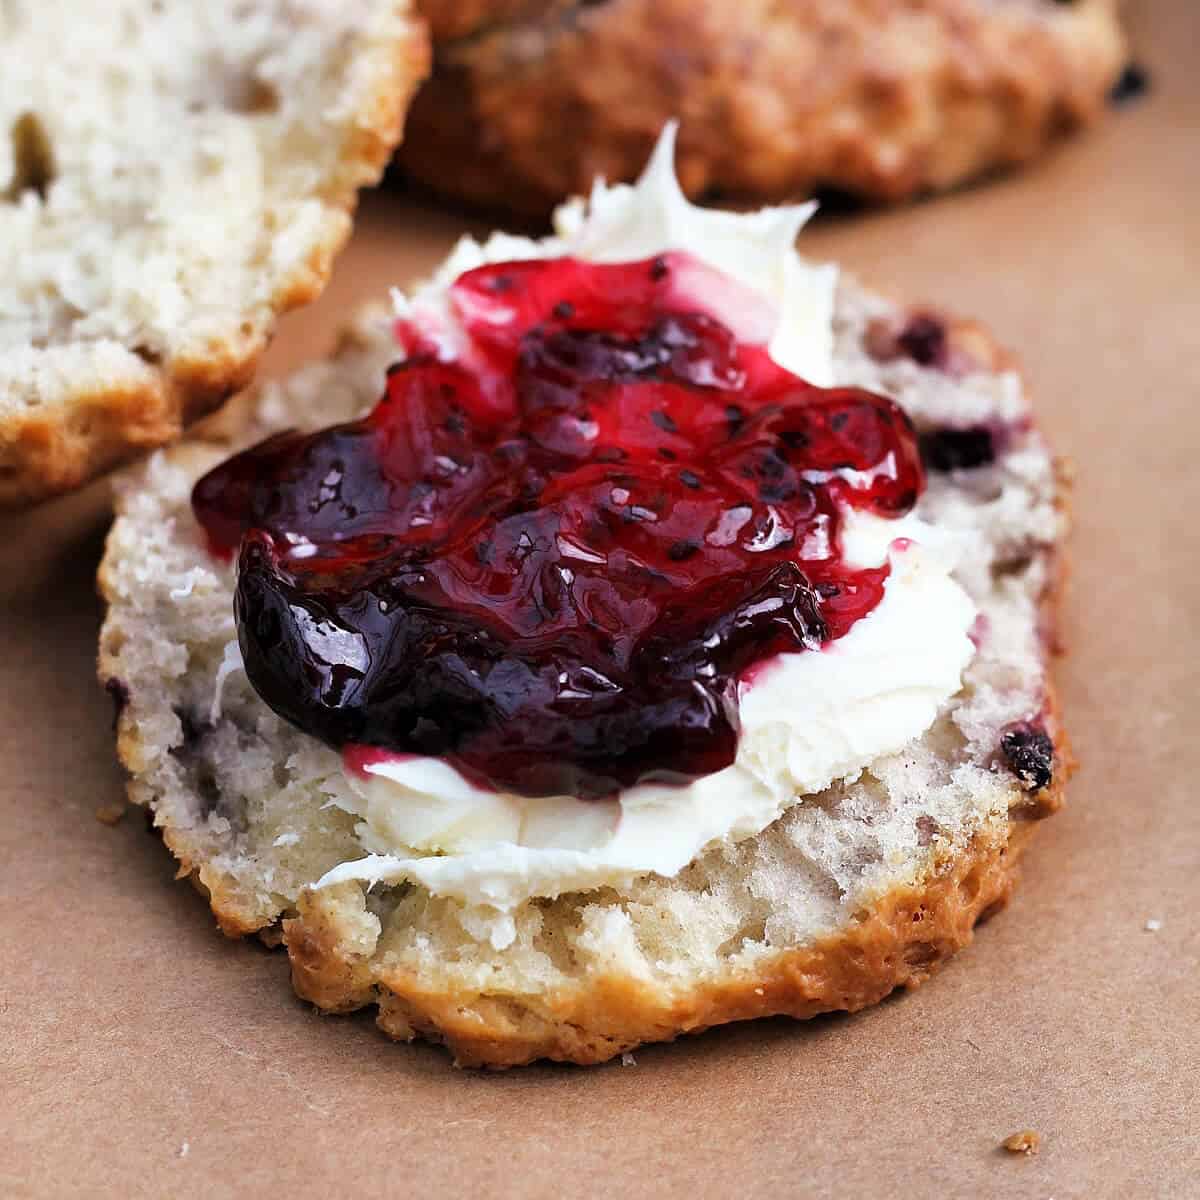 Half a scone with blackberry jam and cream.